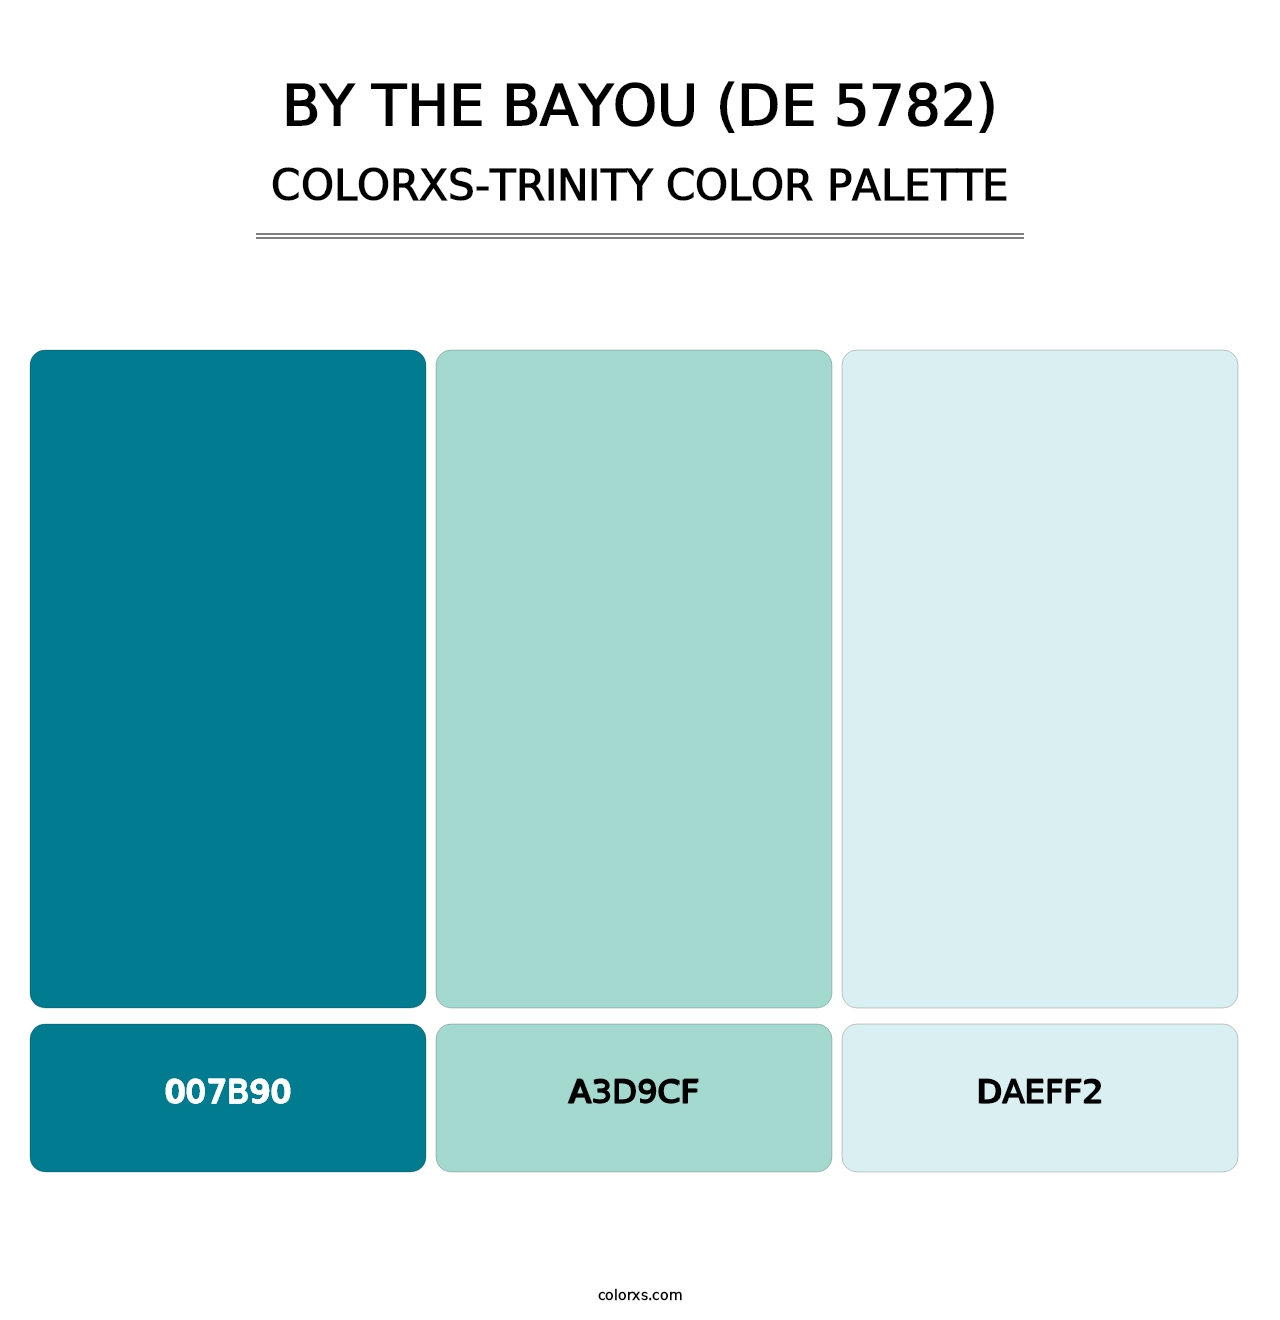 By the Bayou (DE 5782) - Colorxs Trinity Palette